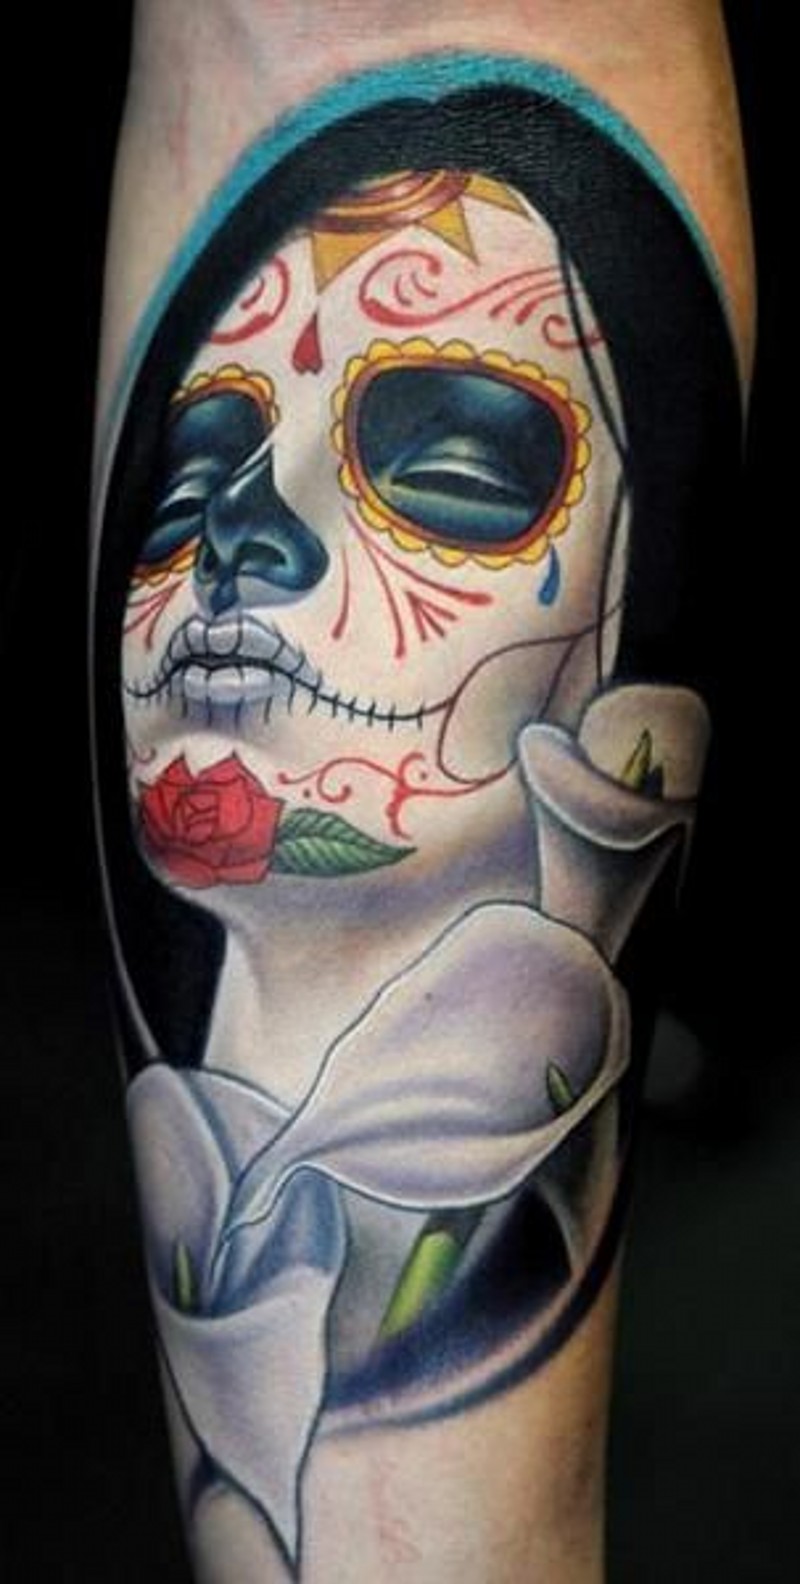 Tatuaje en el antebrazo, la santa muerte hermosa y lirios blancos